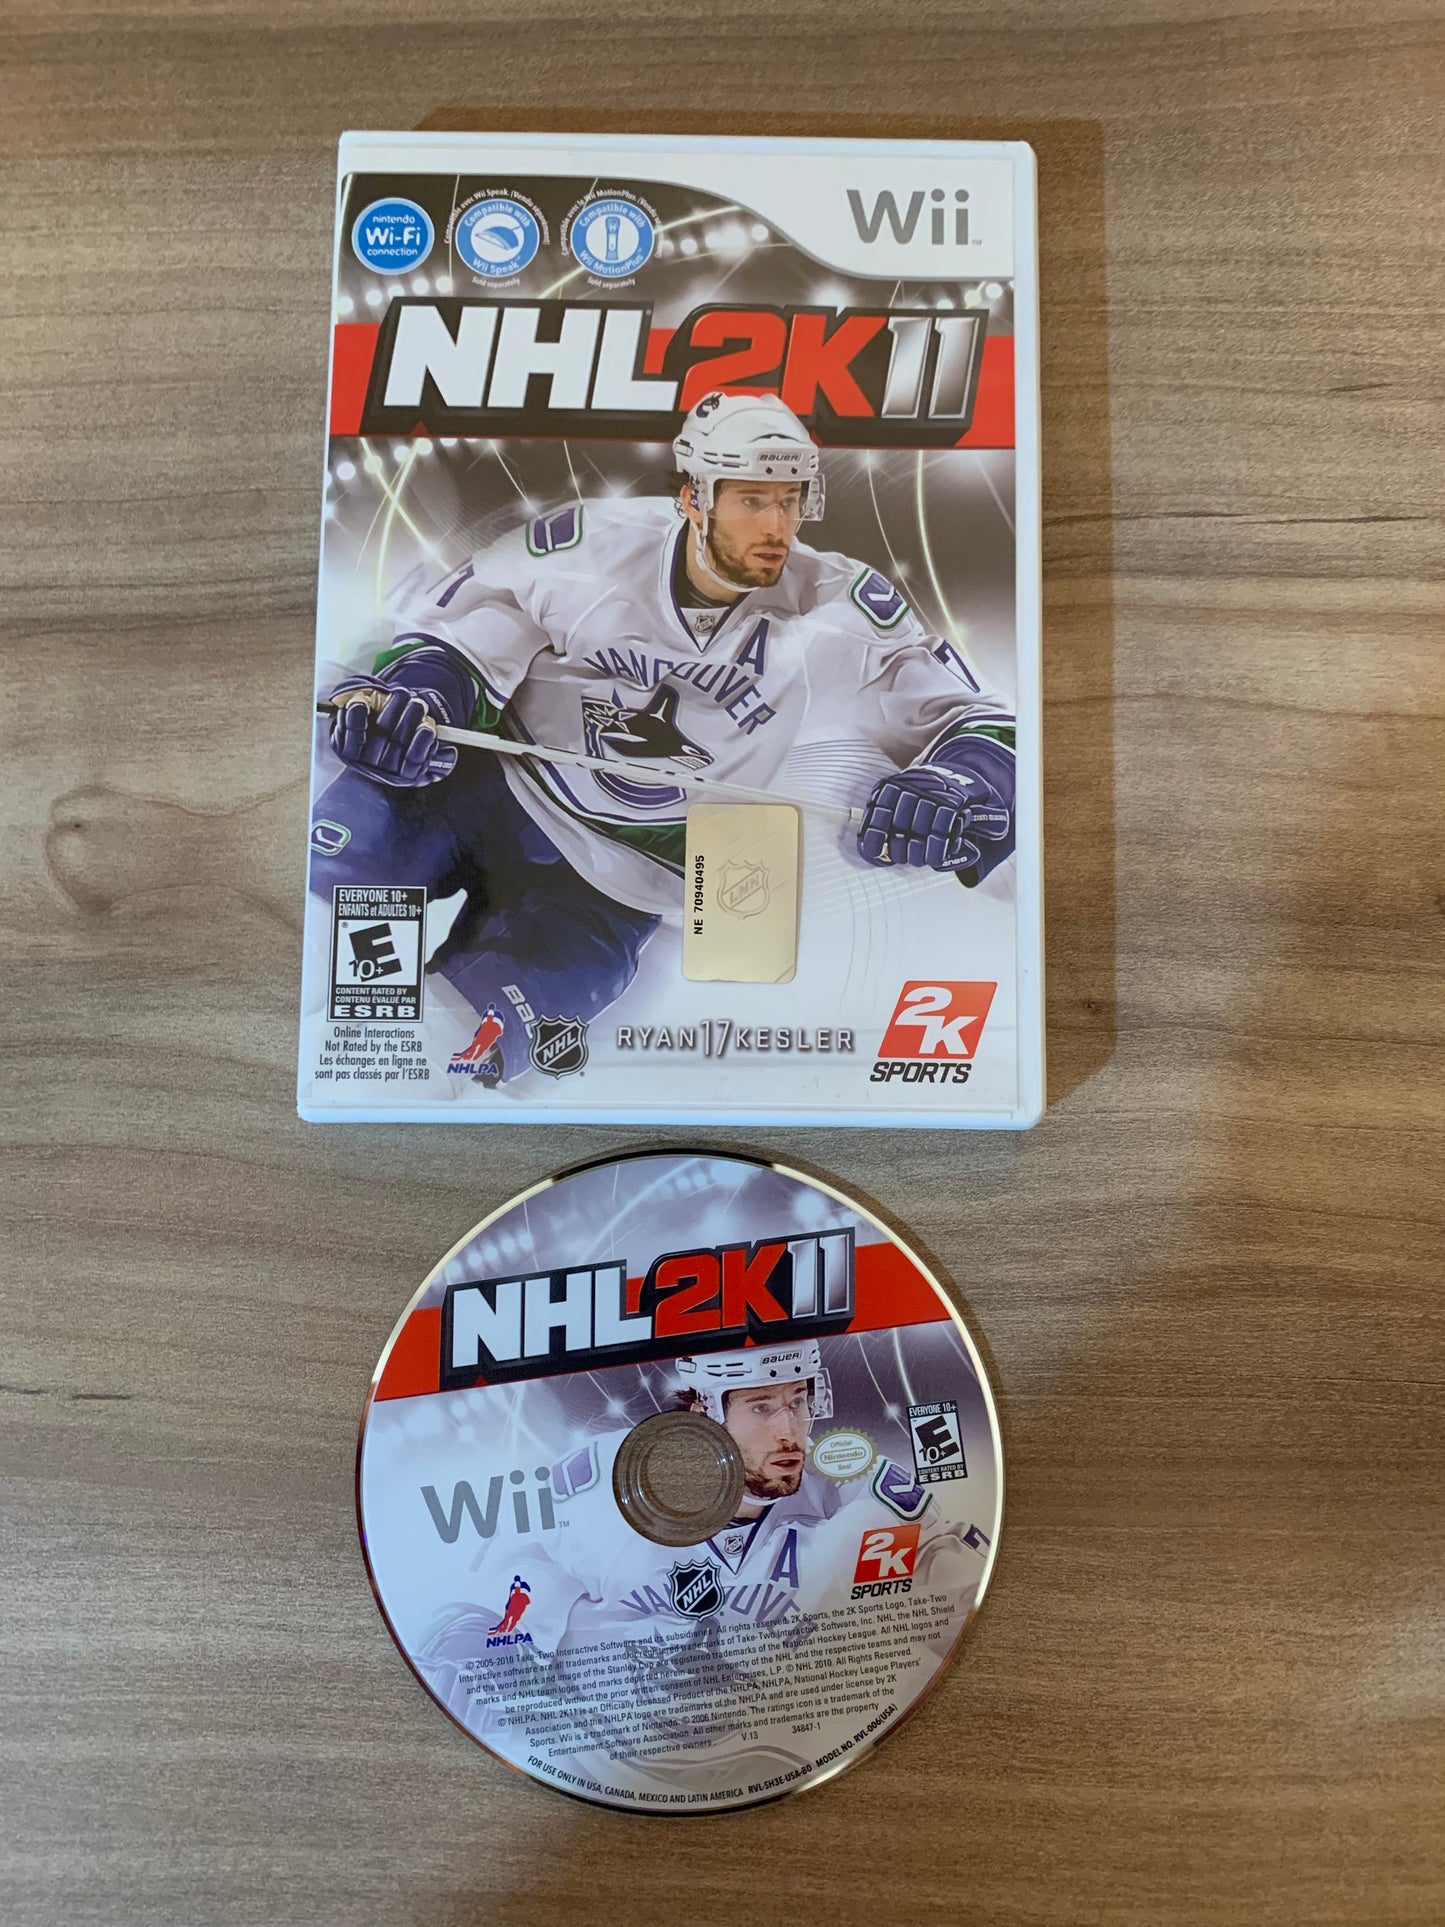 PiXEL-RETRO.COM : NINTENDO WII COMPLET CIB BOX MANUAL GAME NTSC 2K SPORTS NHL 2K11